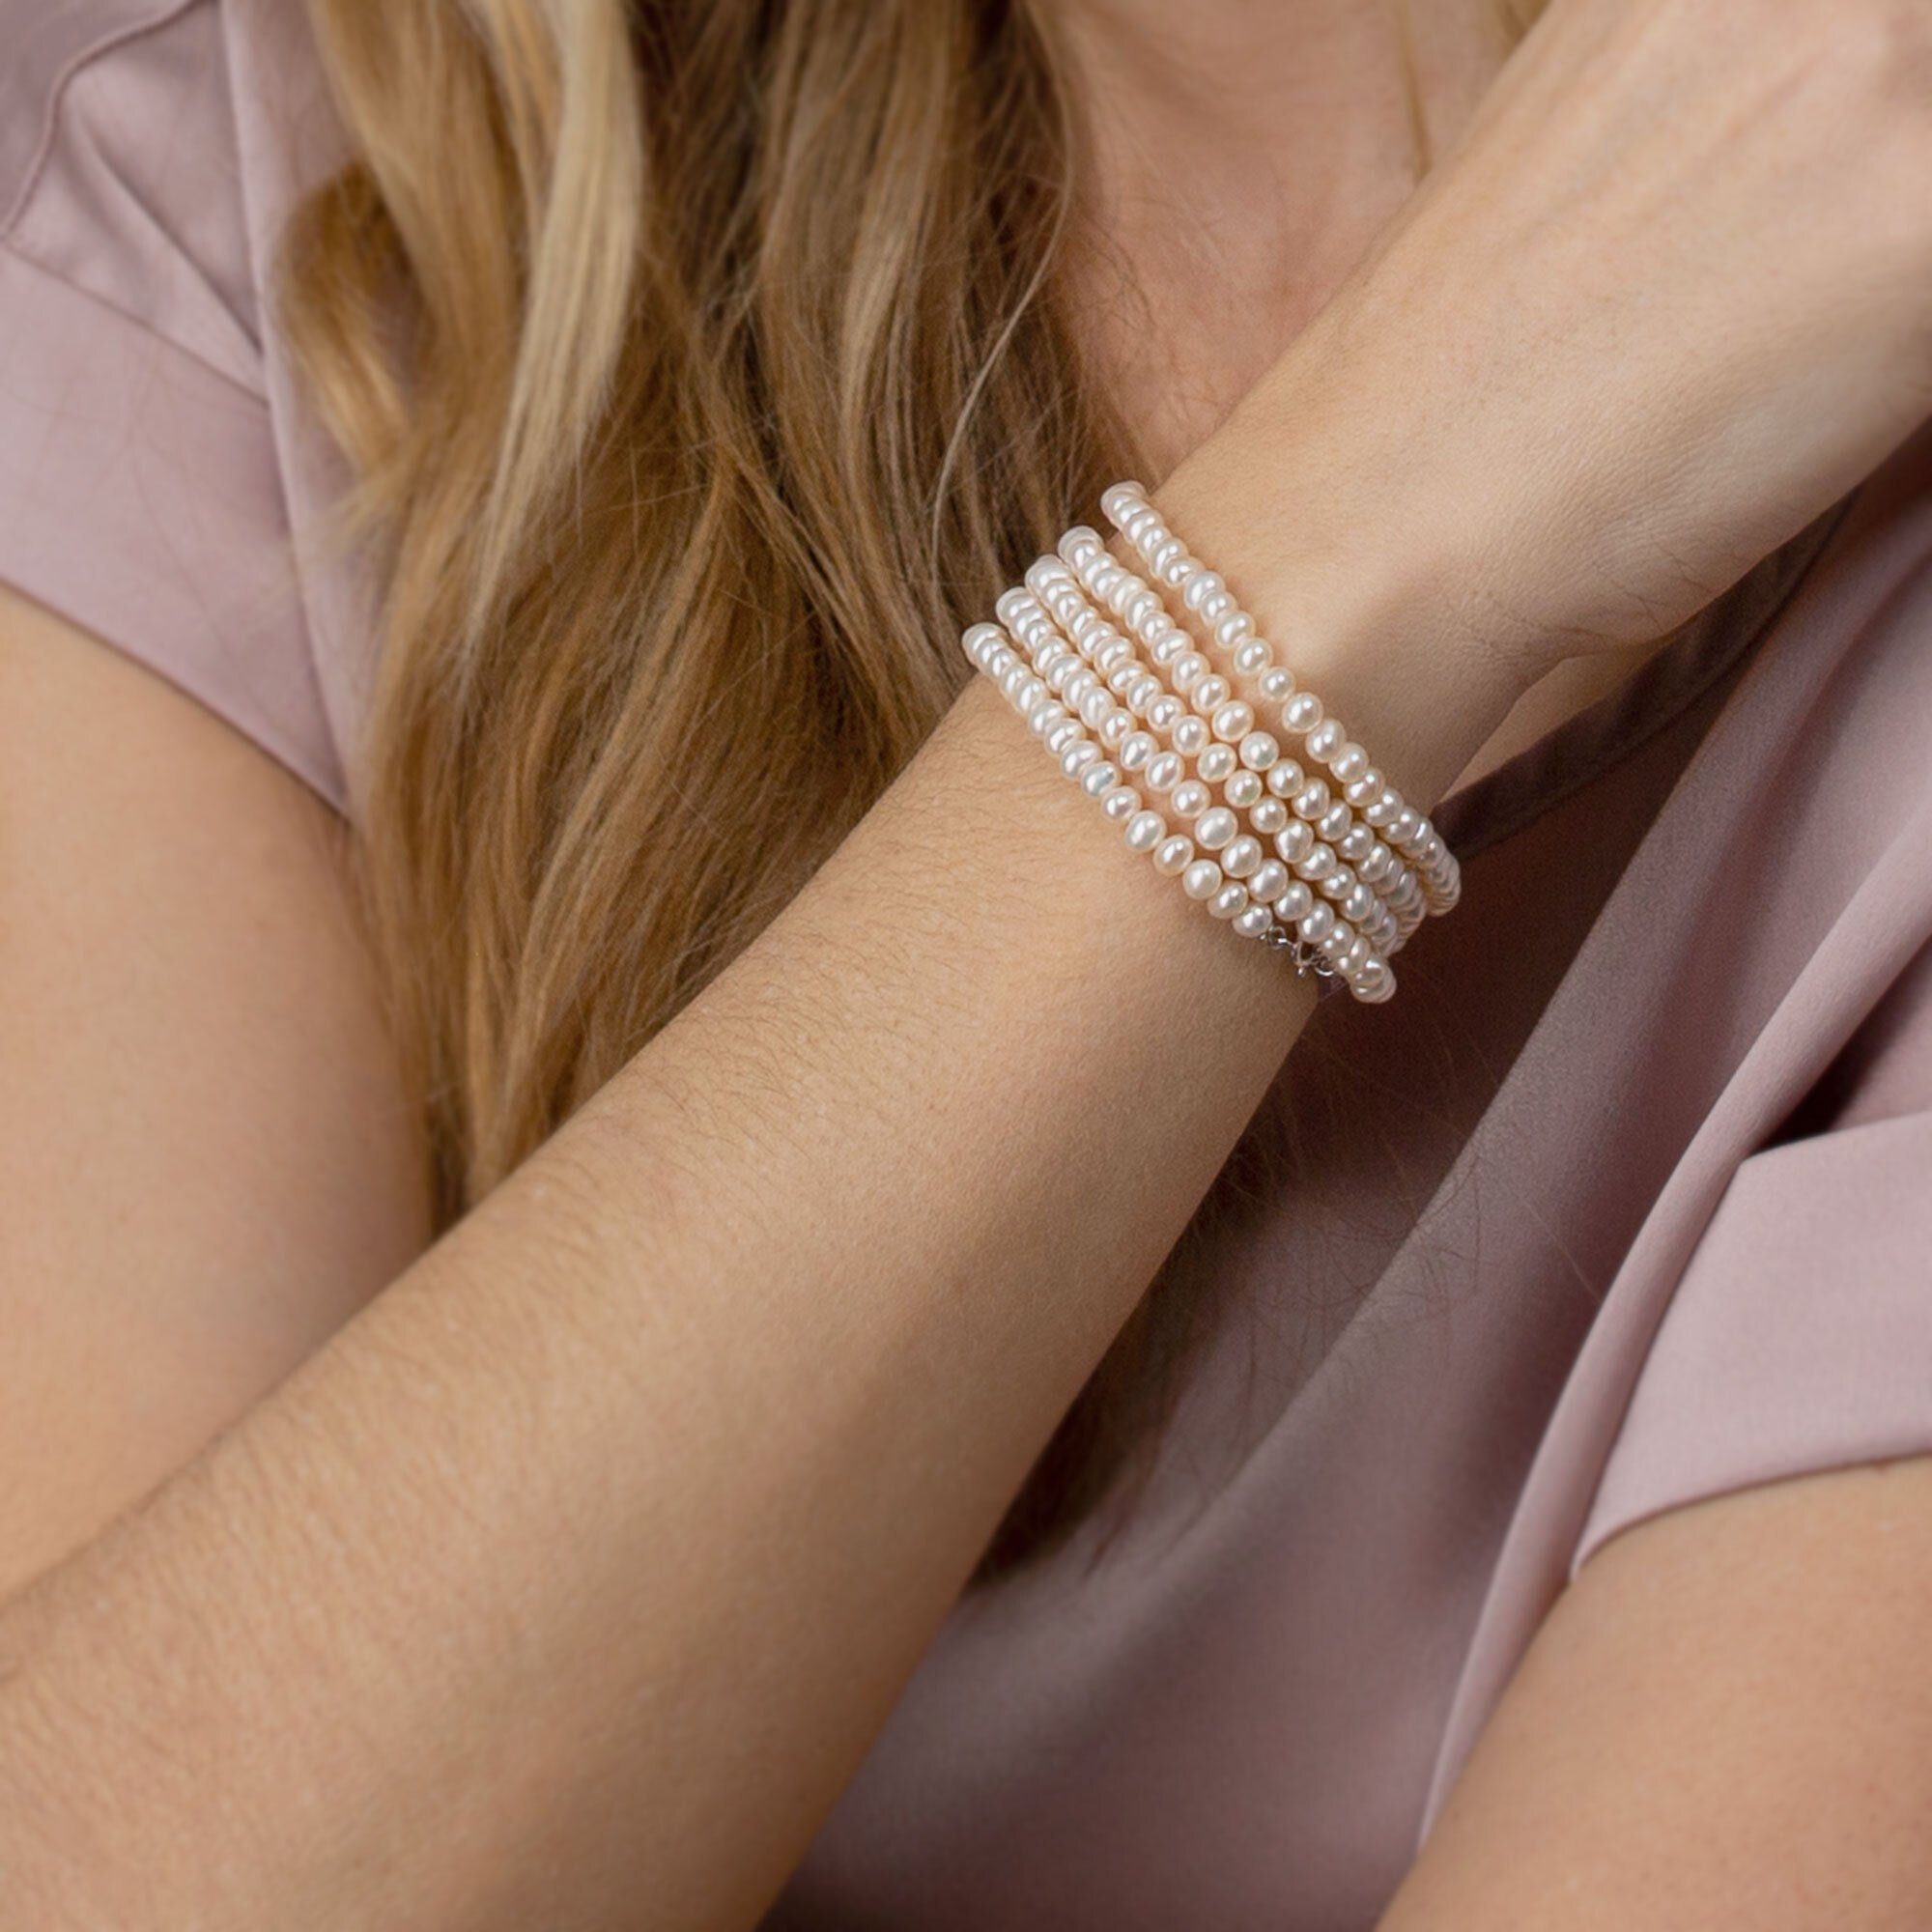 MOE silber/weiße AILORIA Silber/weiße armband-halskette Armband-Halskette Perle Armband perle,